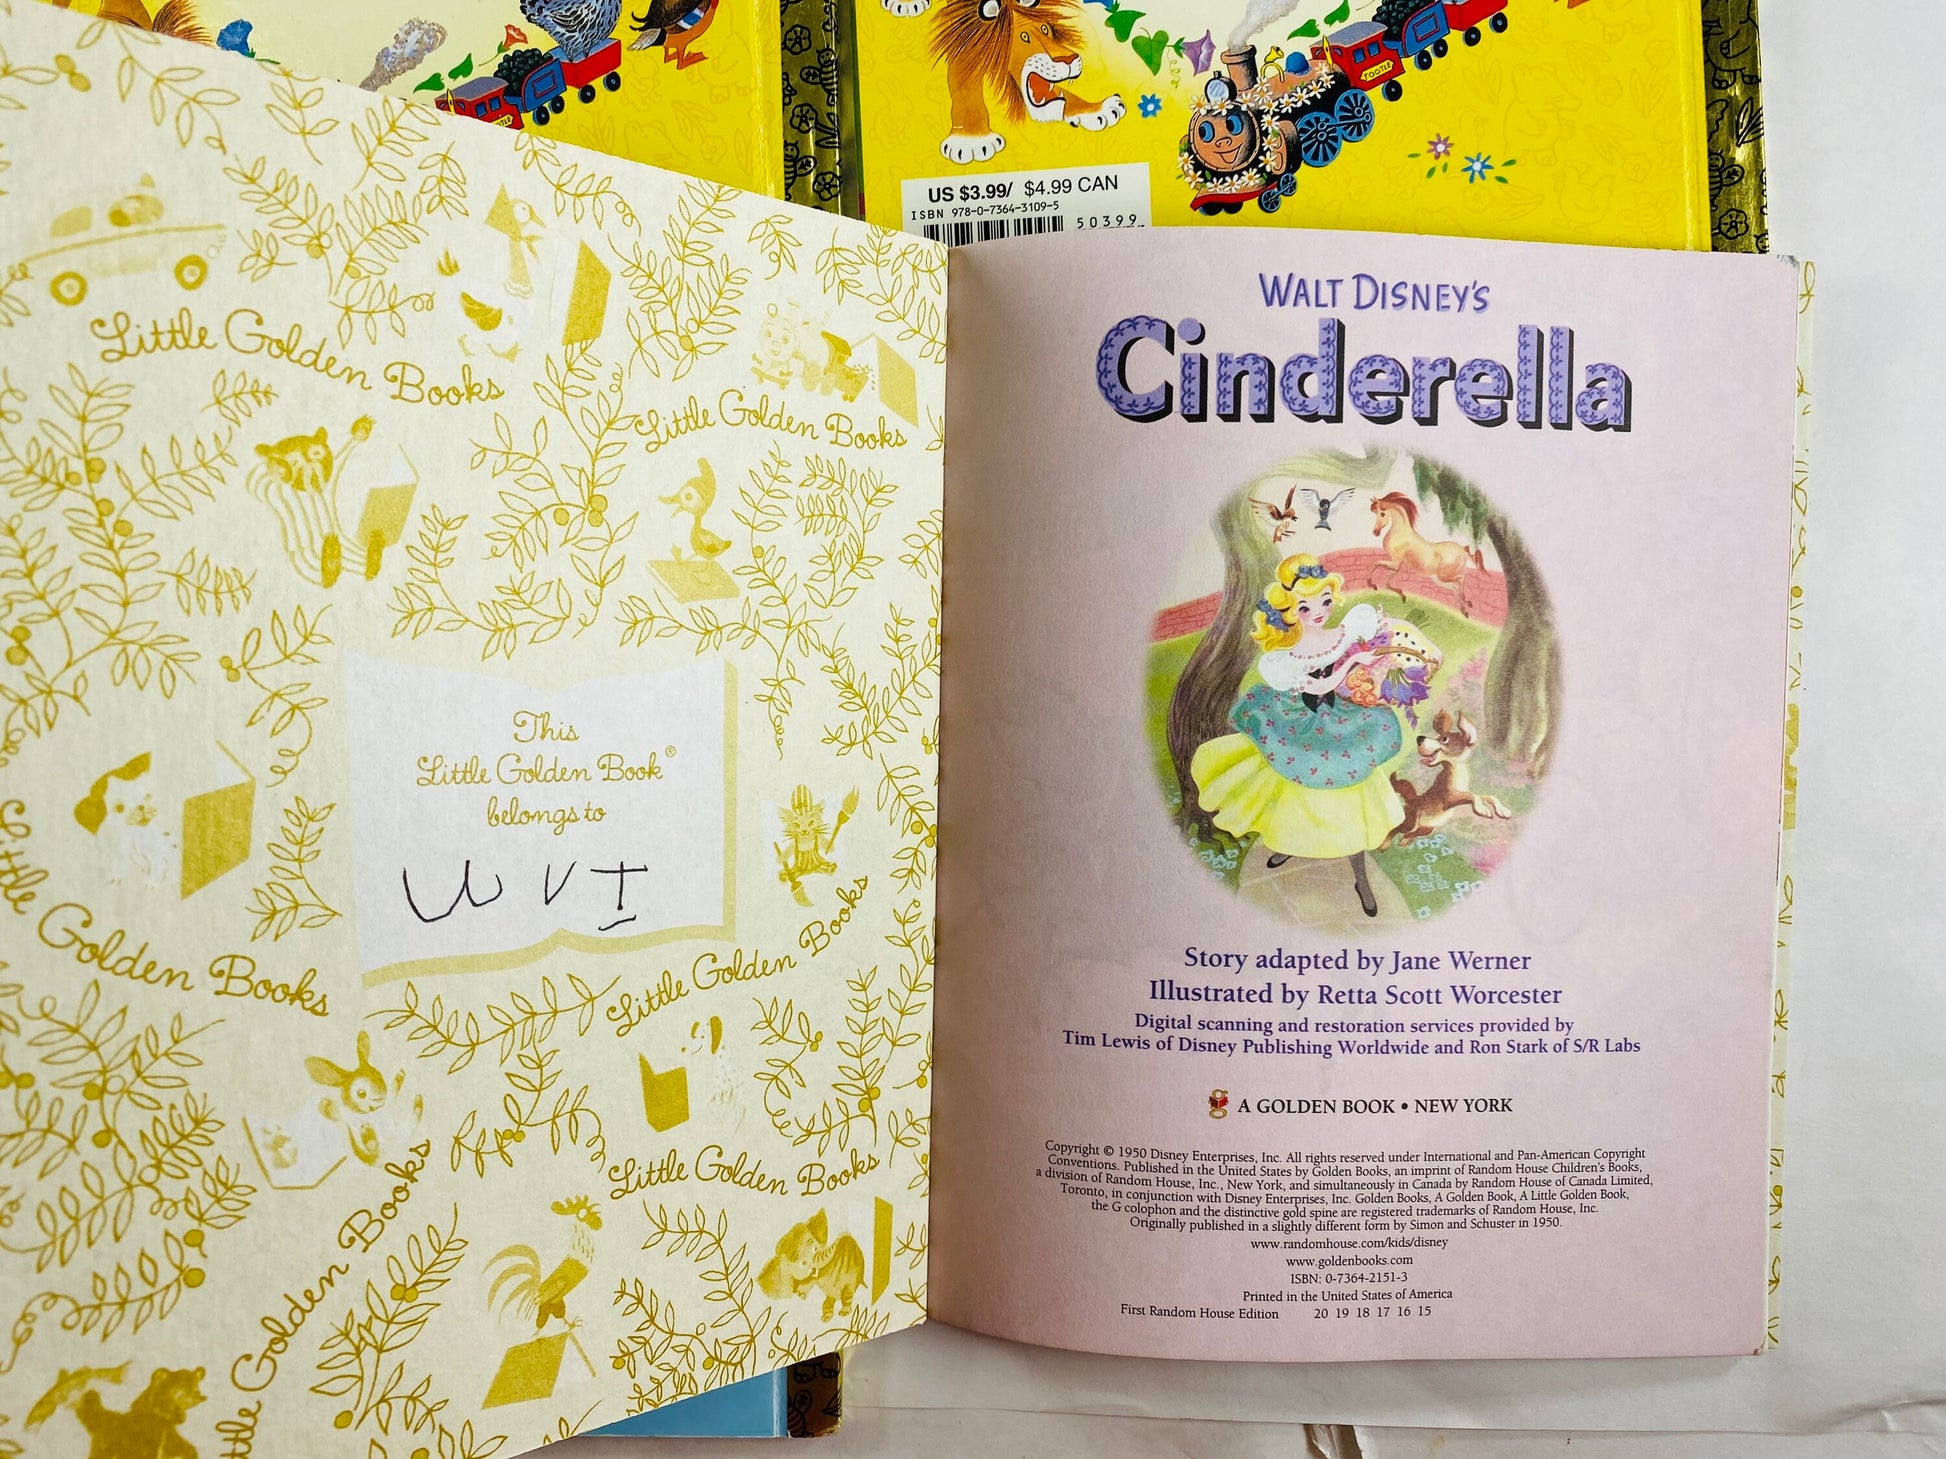 Disney Princess lot vintage set of 4 Little Golden Books Sleeping Beauty Cinderella